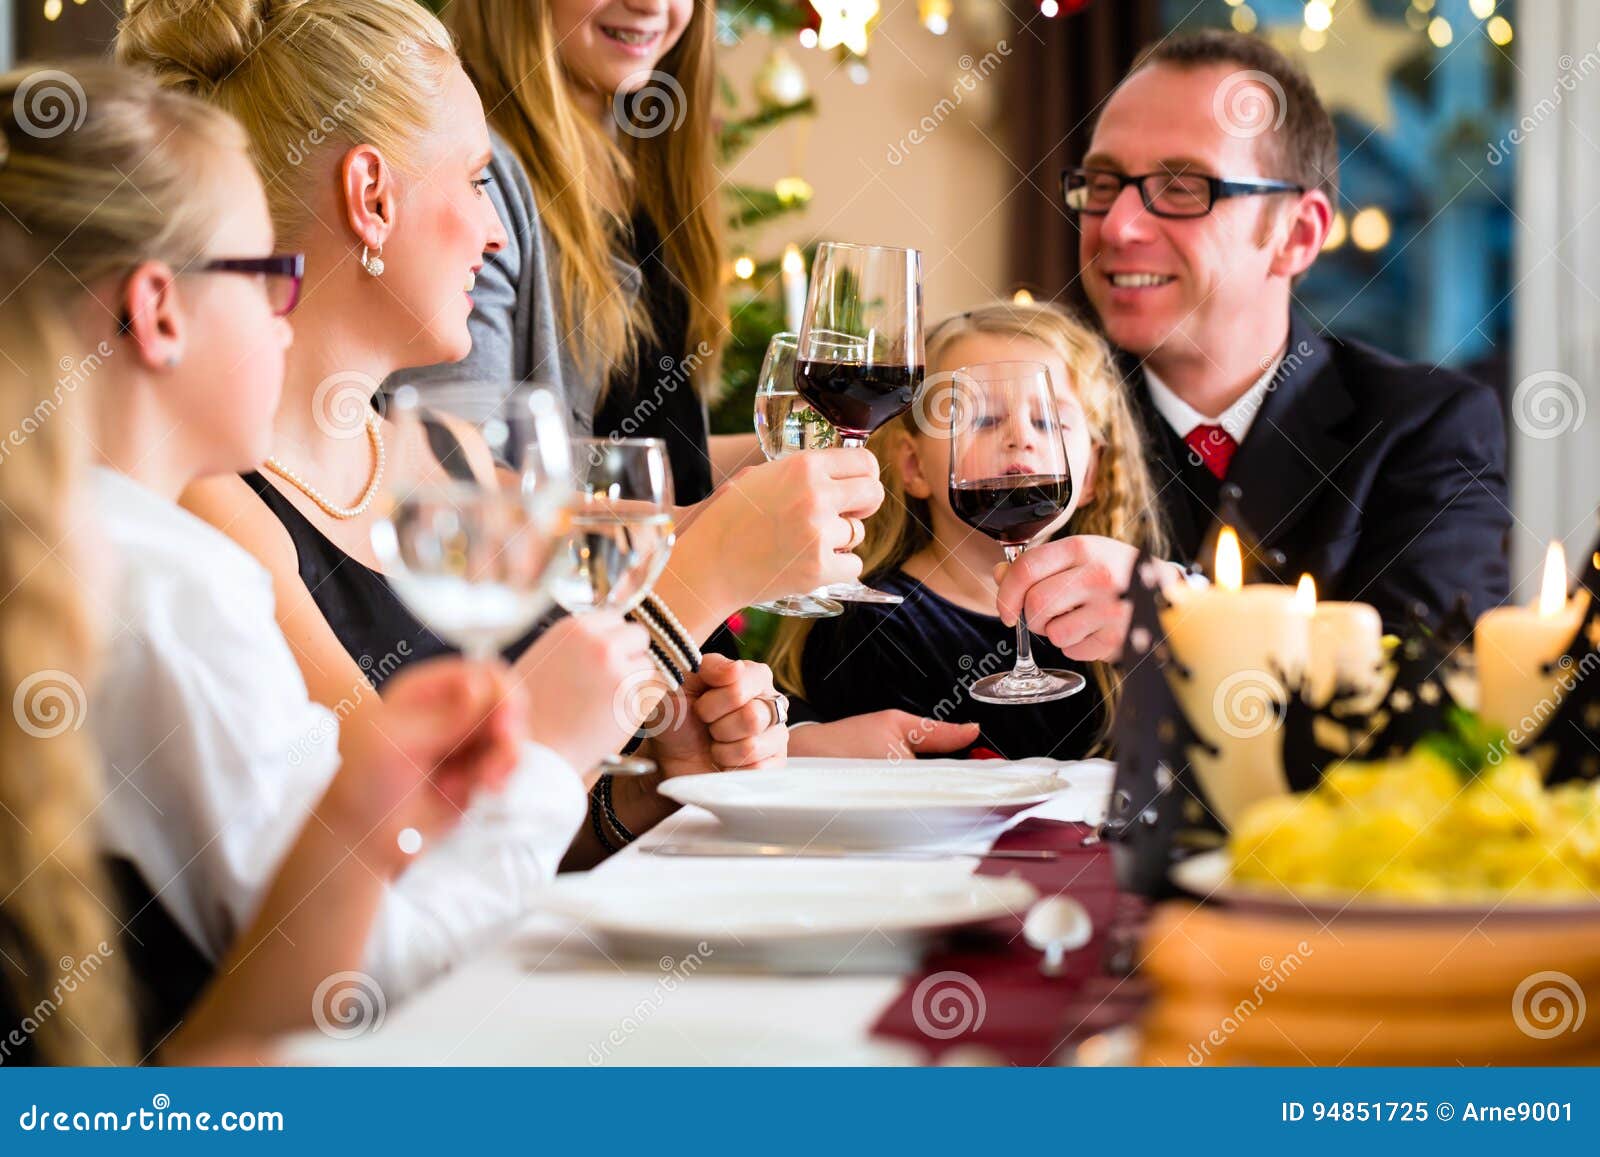 Family Celebrating Christmas Dinner Stock Image Image Of Holidays Christmas 94851725